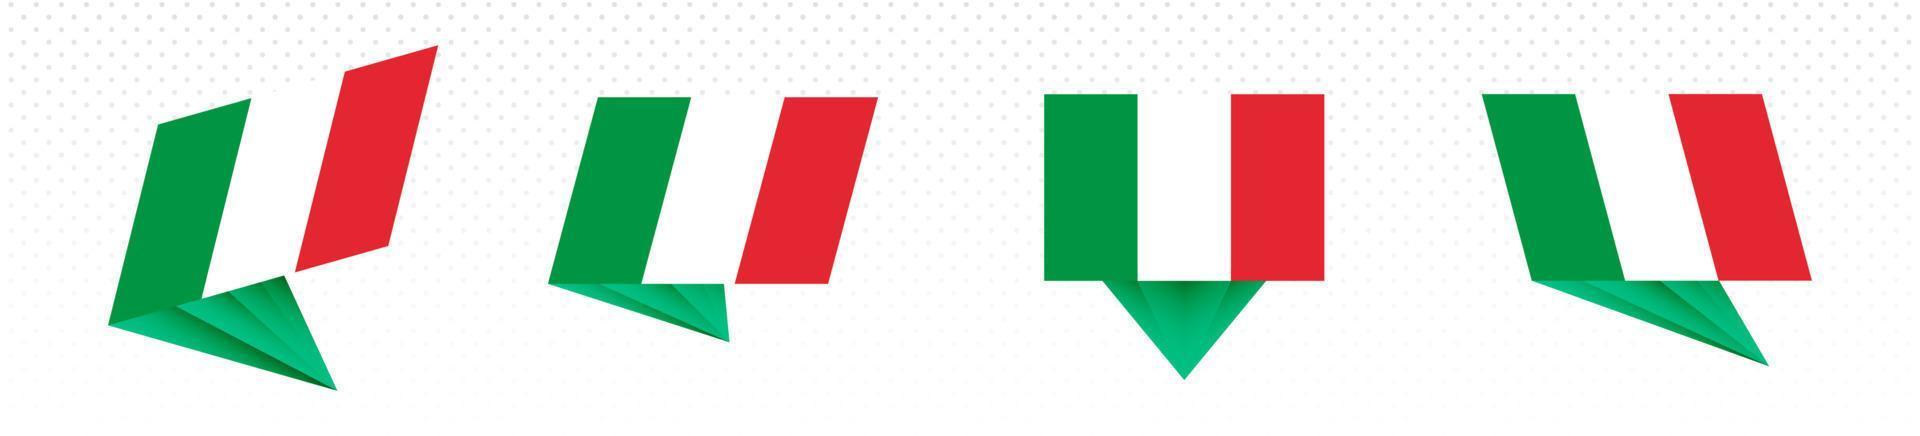 vlag van Italië in modern abstract ontwerp, vlag set. vector